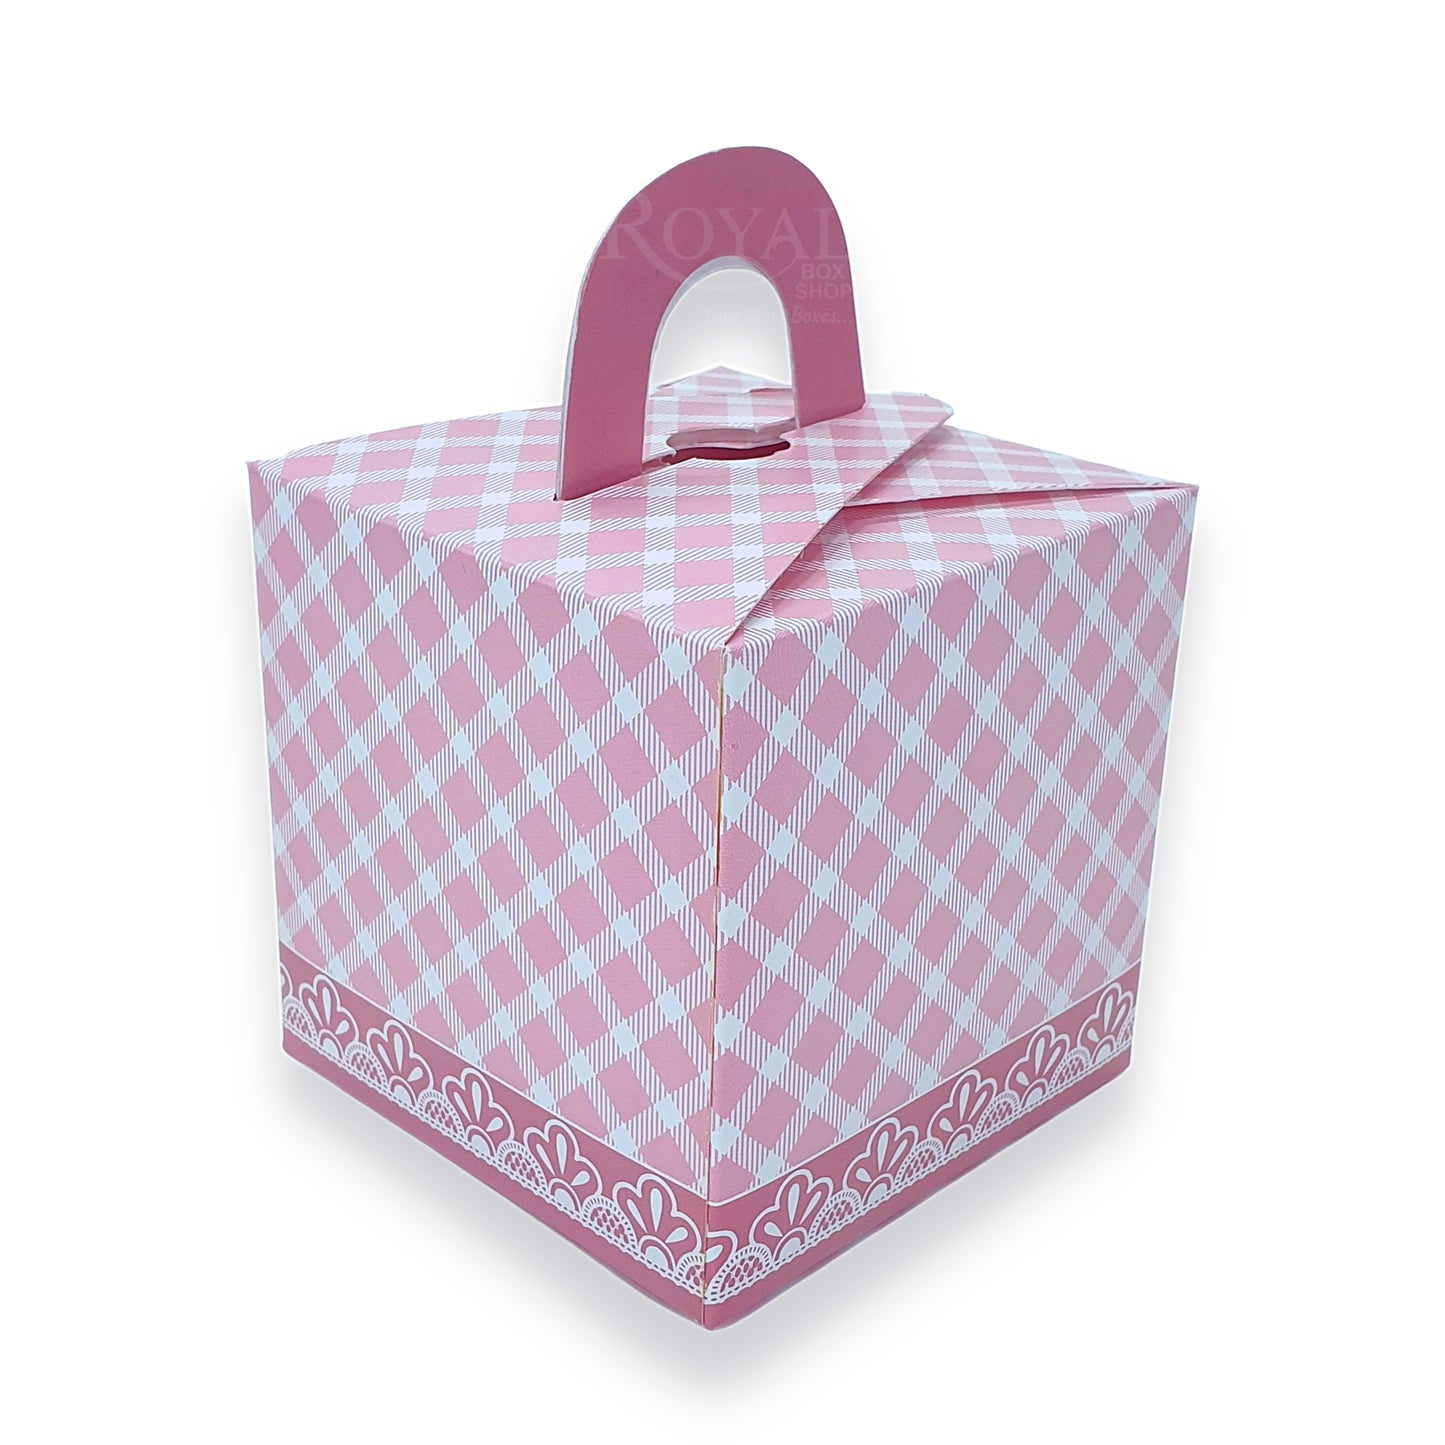 Single Cupcake Box With Window - Size 3.5"x3.5"x3.5" - Pink Check